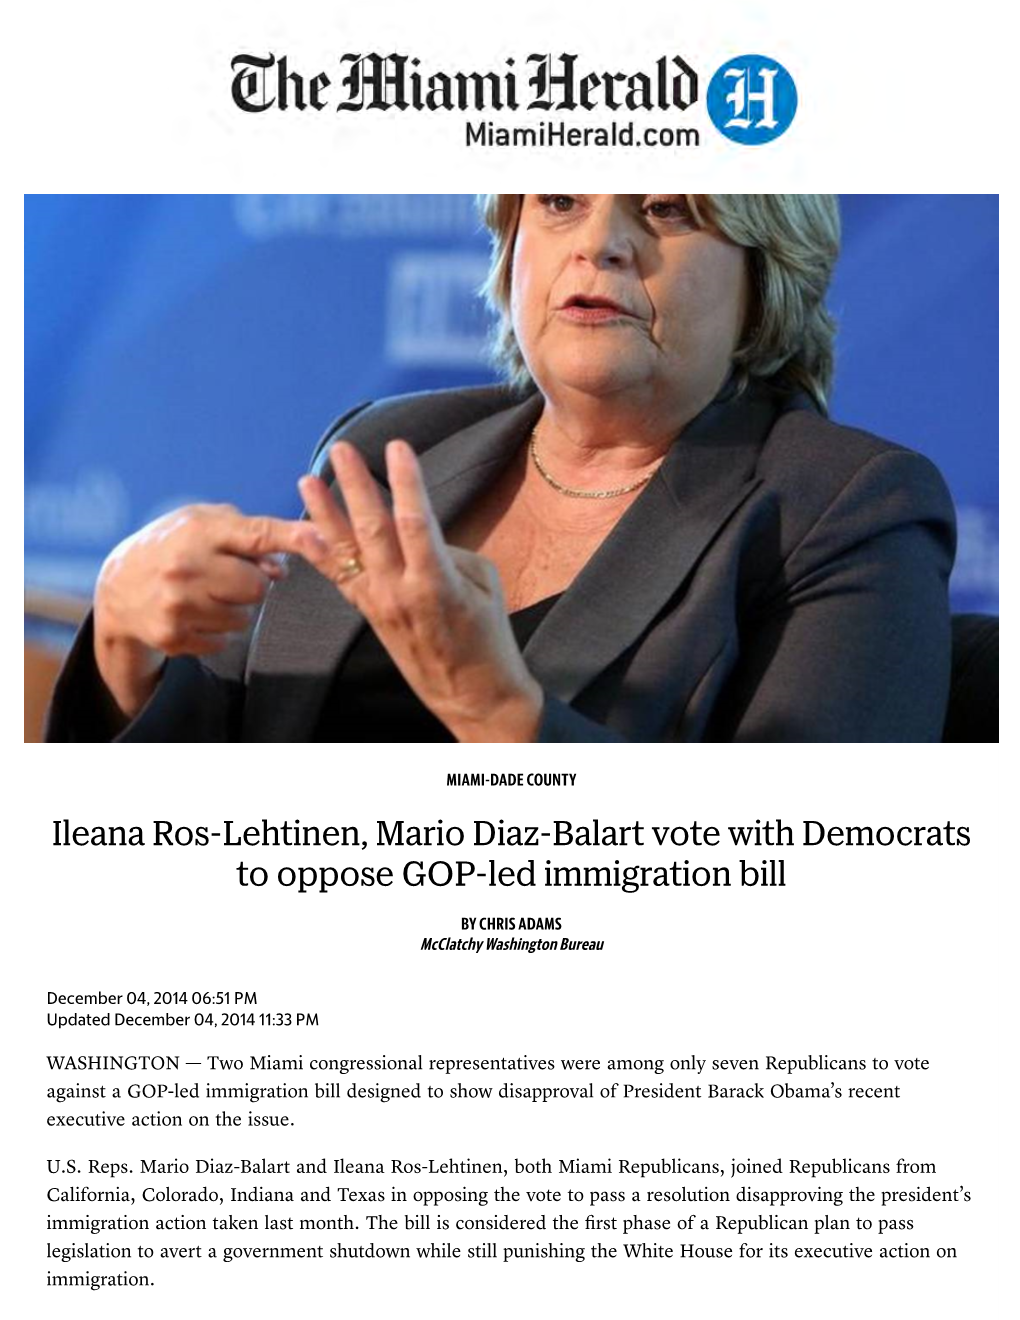 Ileana Ros-Lehtinen, Mario Diaz-Balart Vote with Democrats to Oppose GOP-Led Immigration Bill